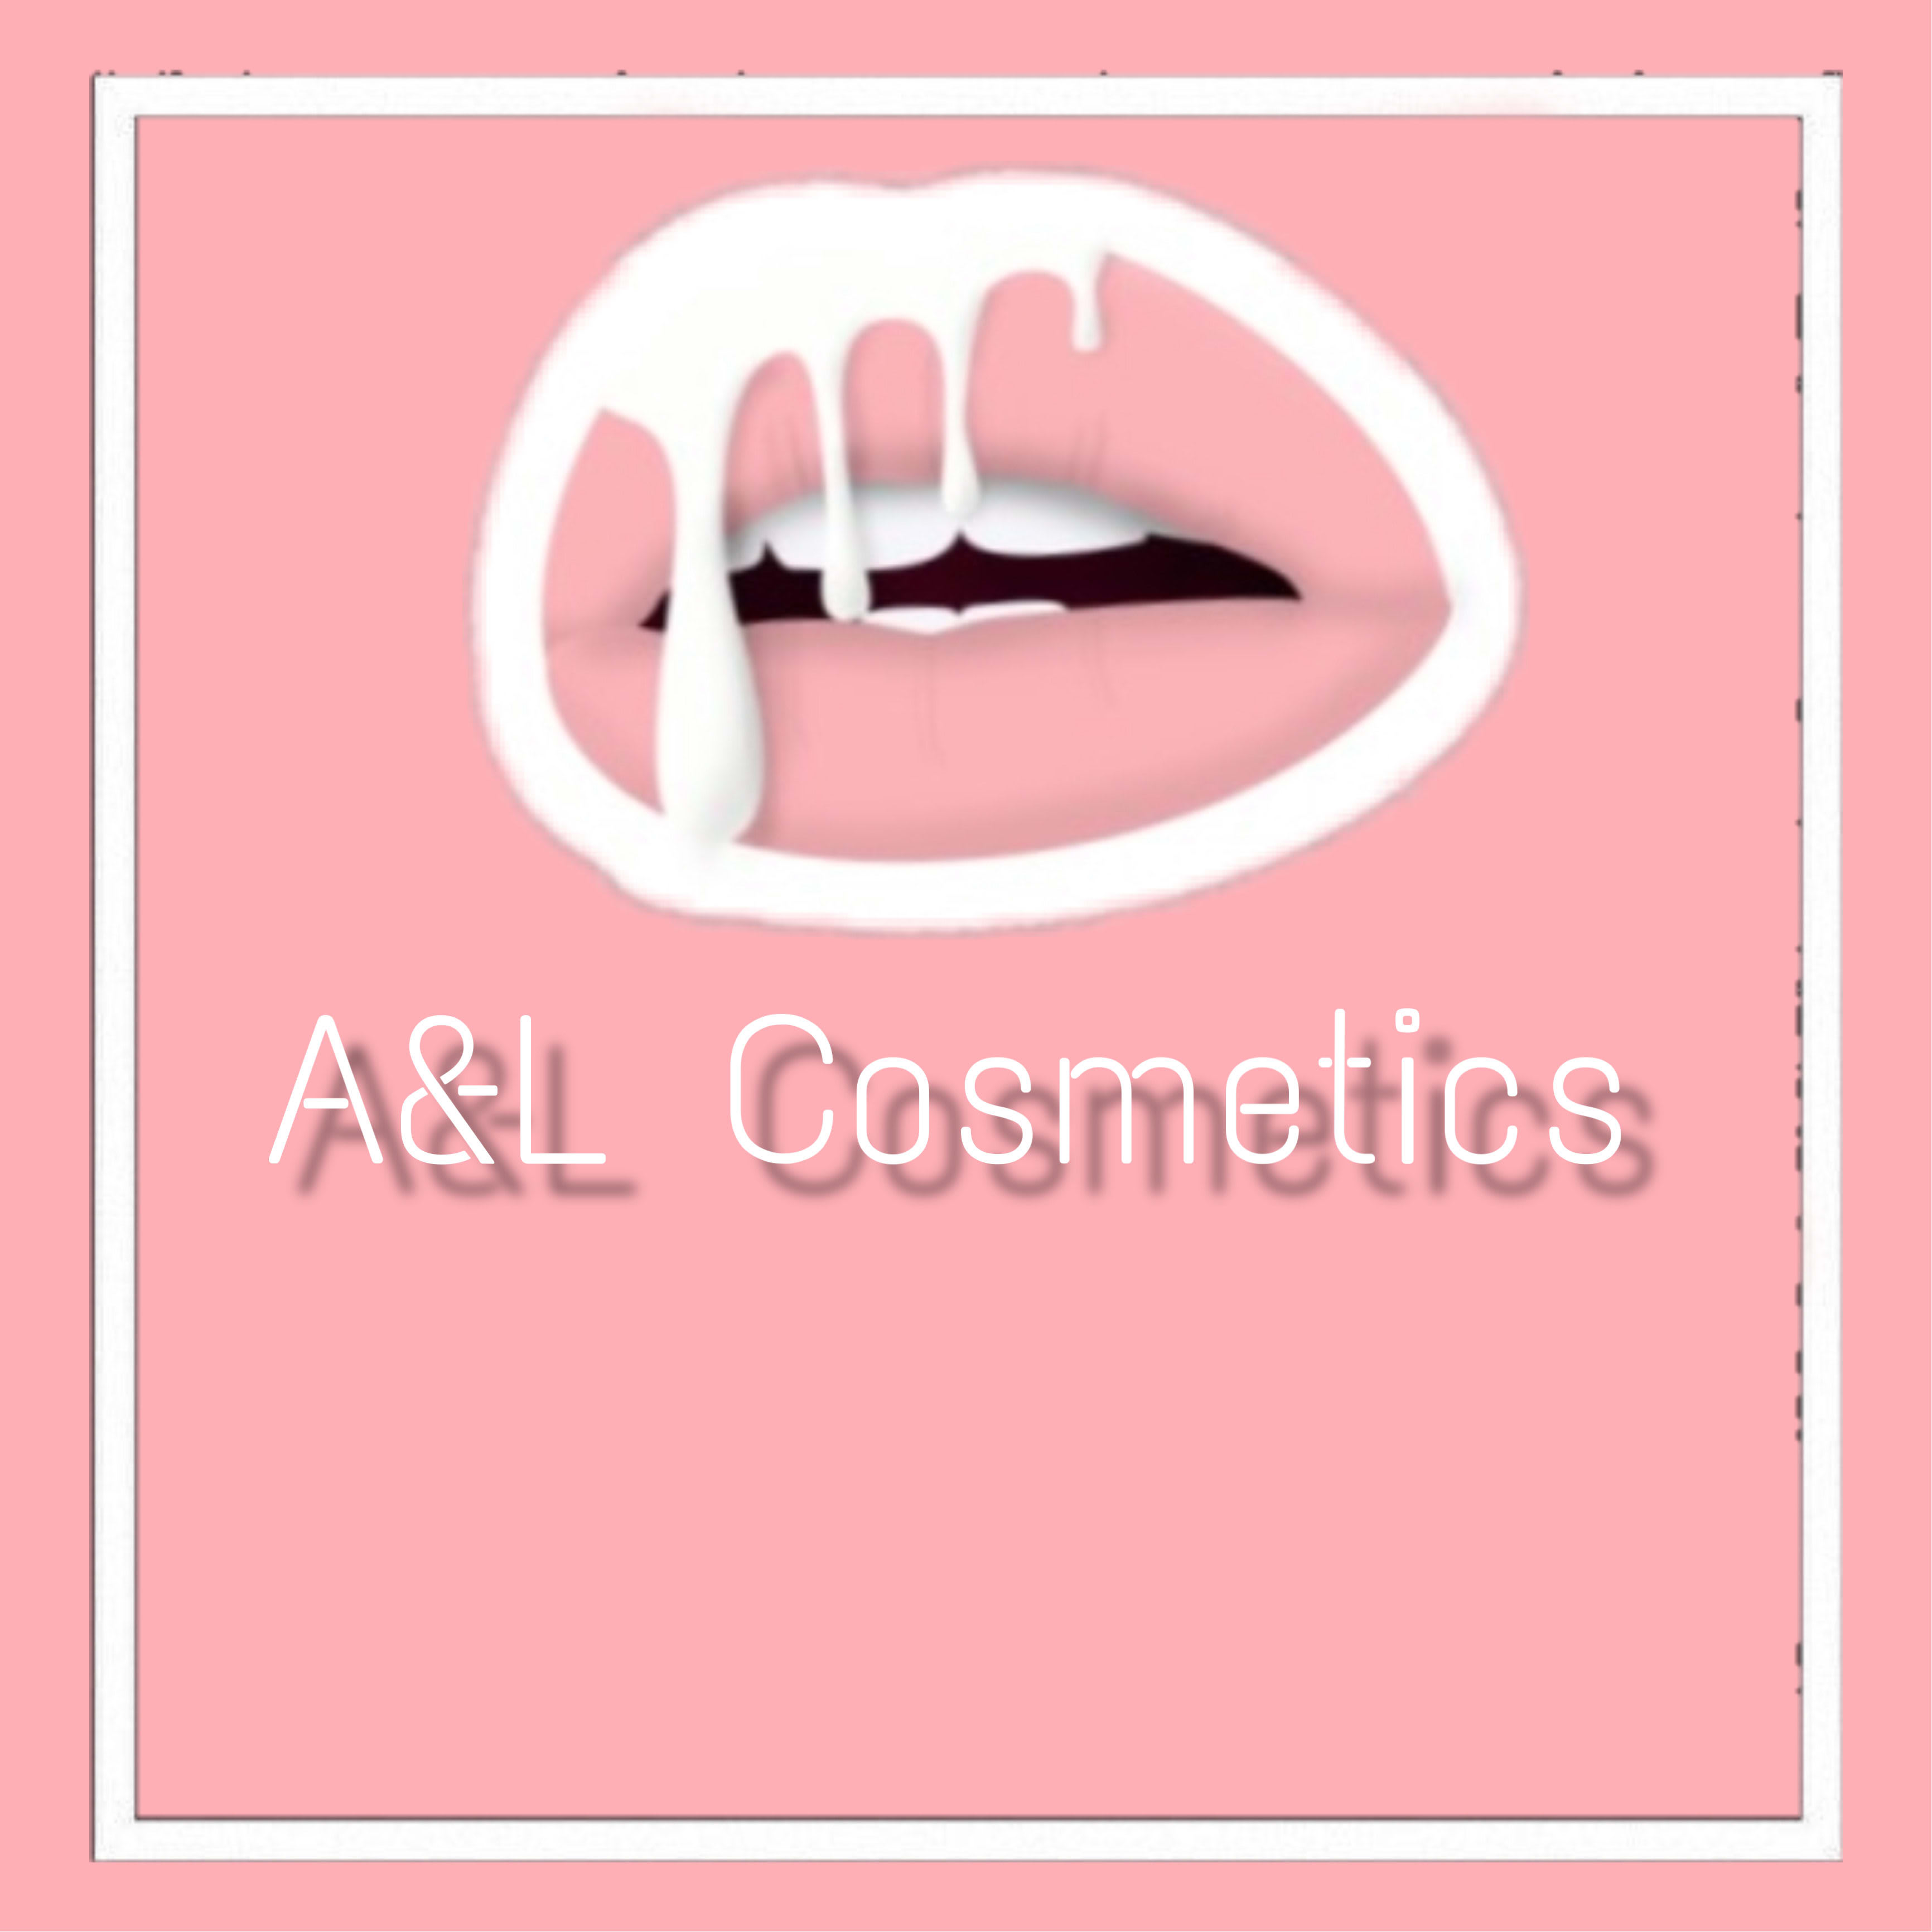 A&L Cosmetics